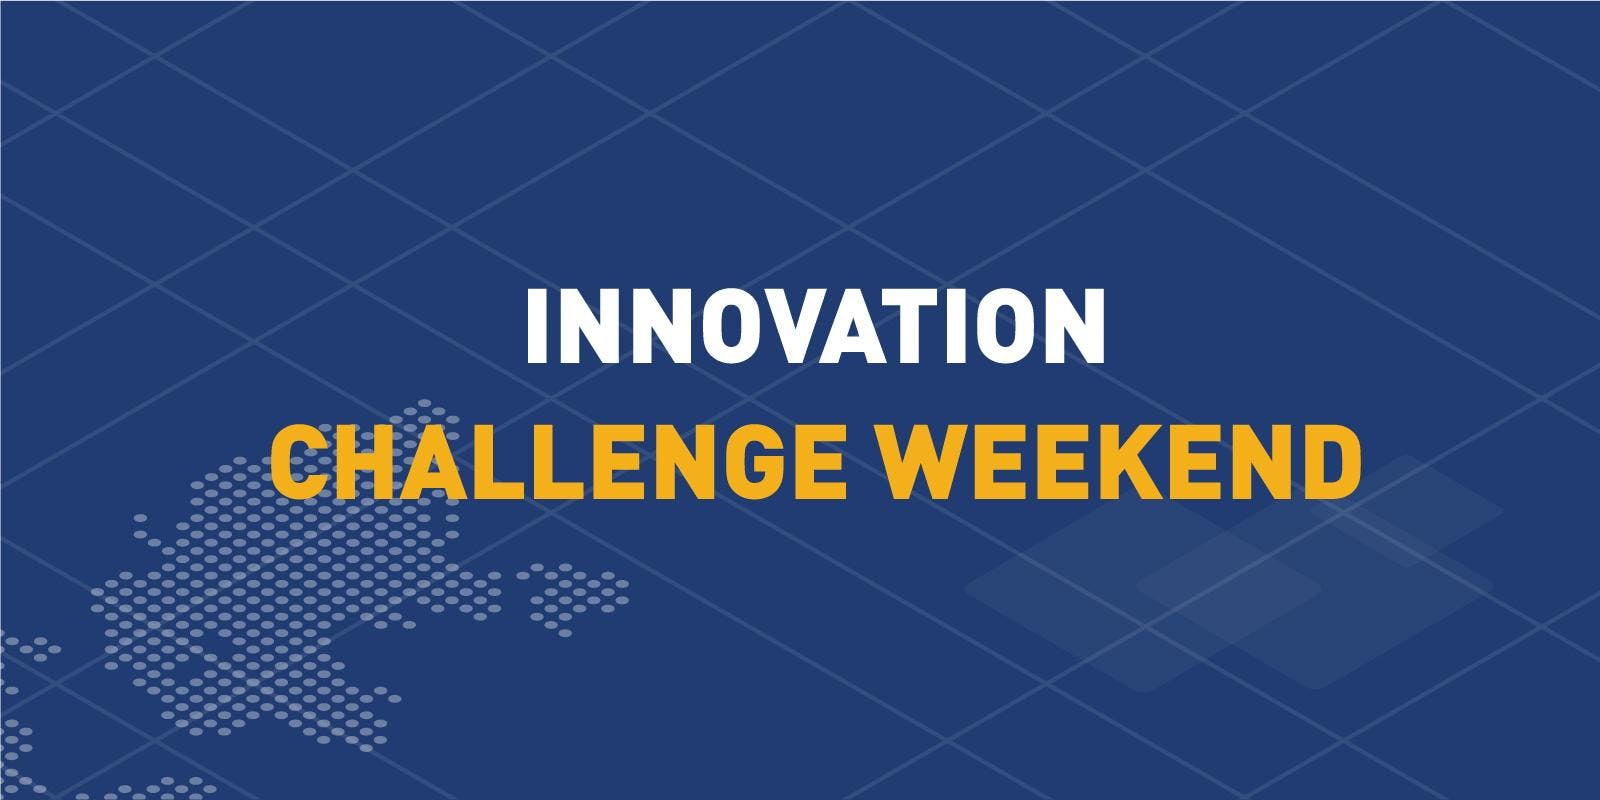 Innovation Challenge Weekend 2019